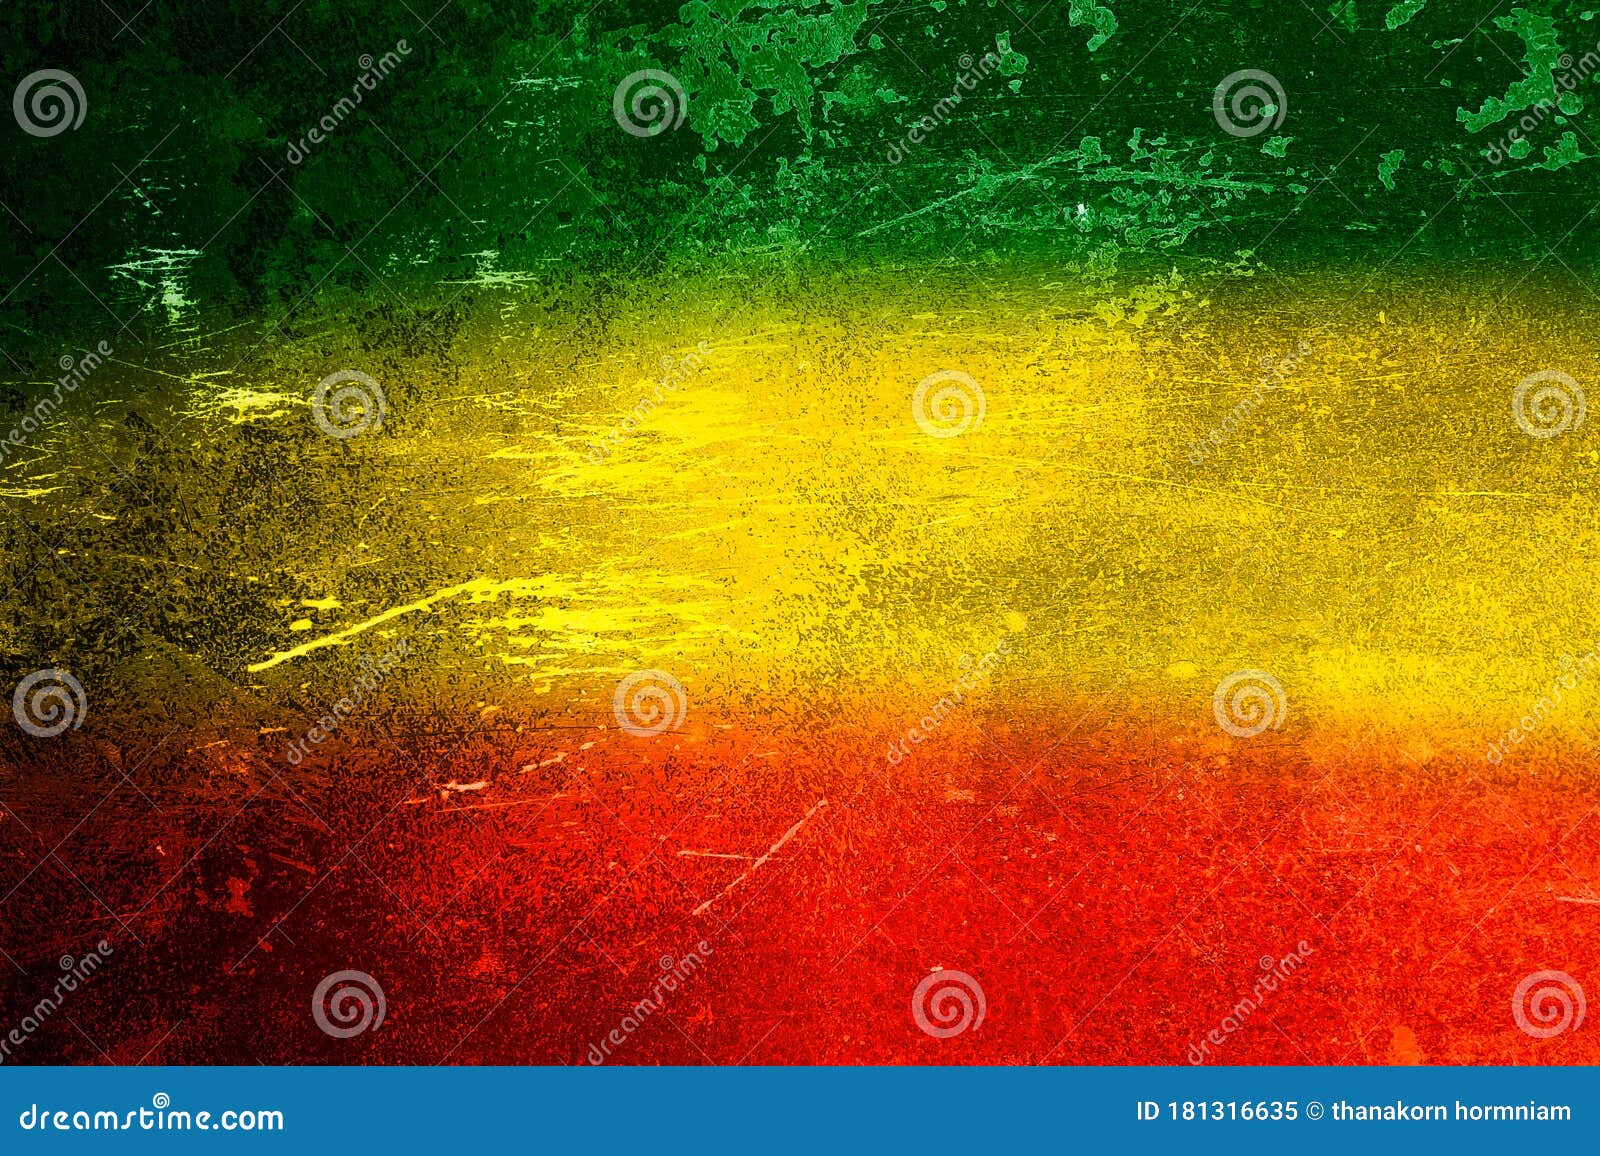 green, yellow, red texture background,reggae background